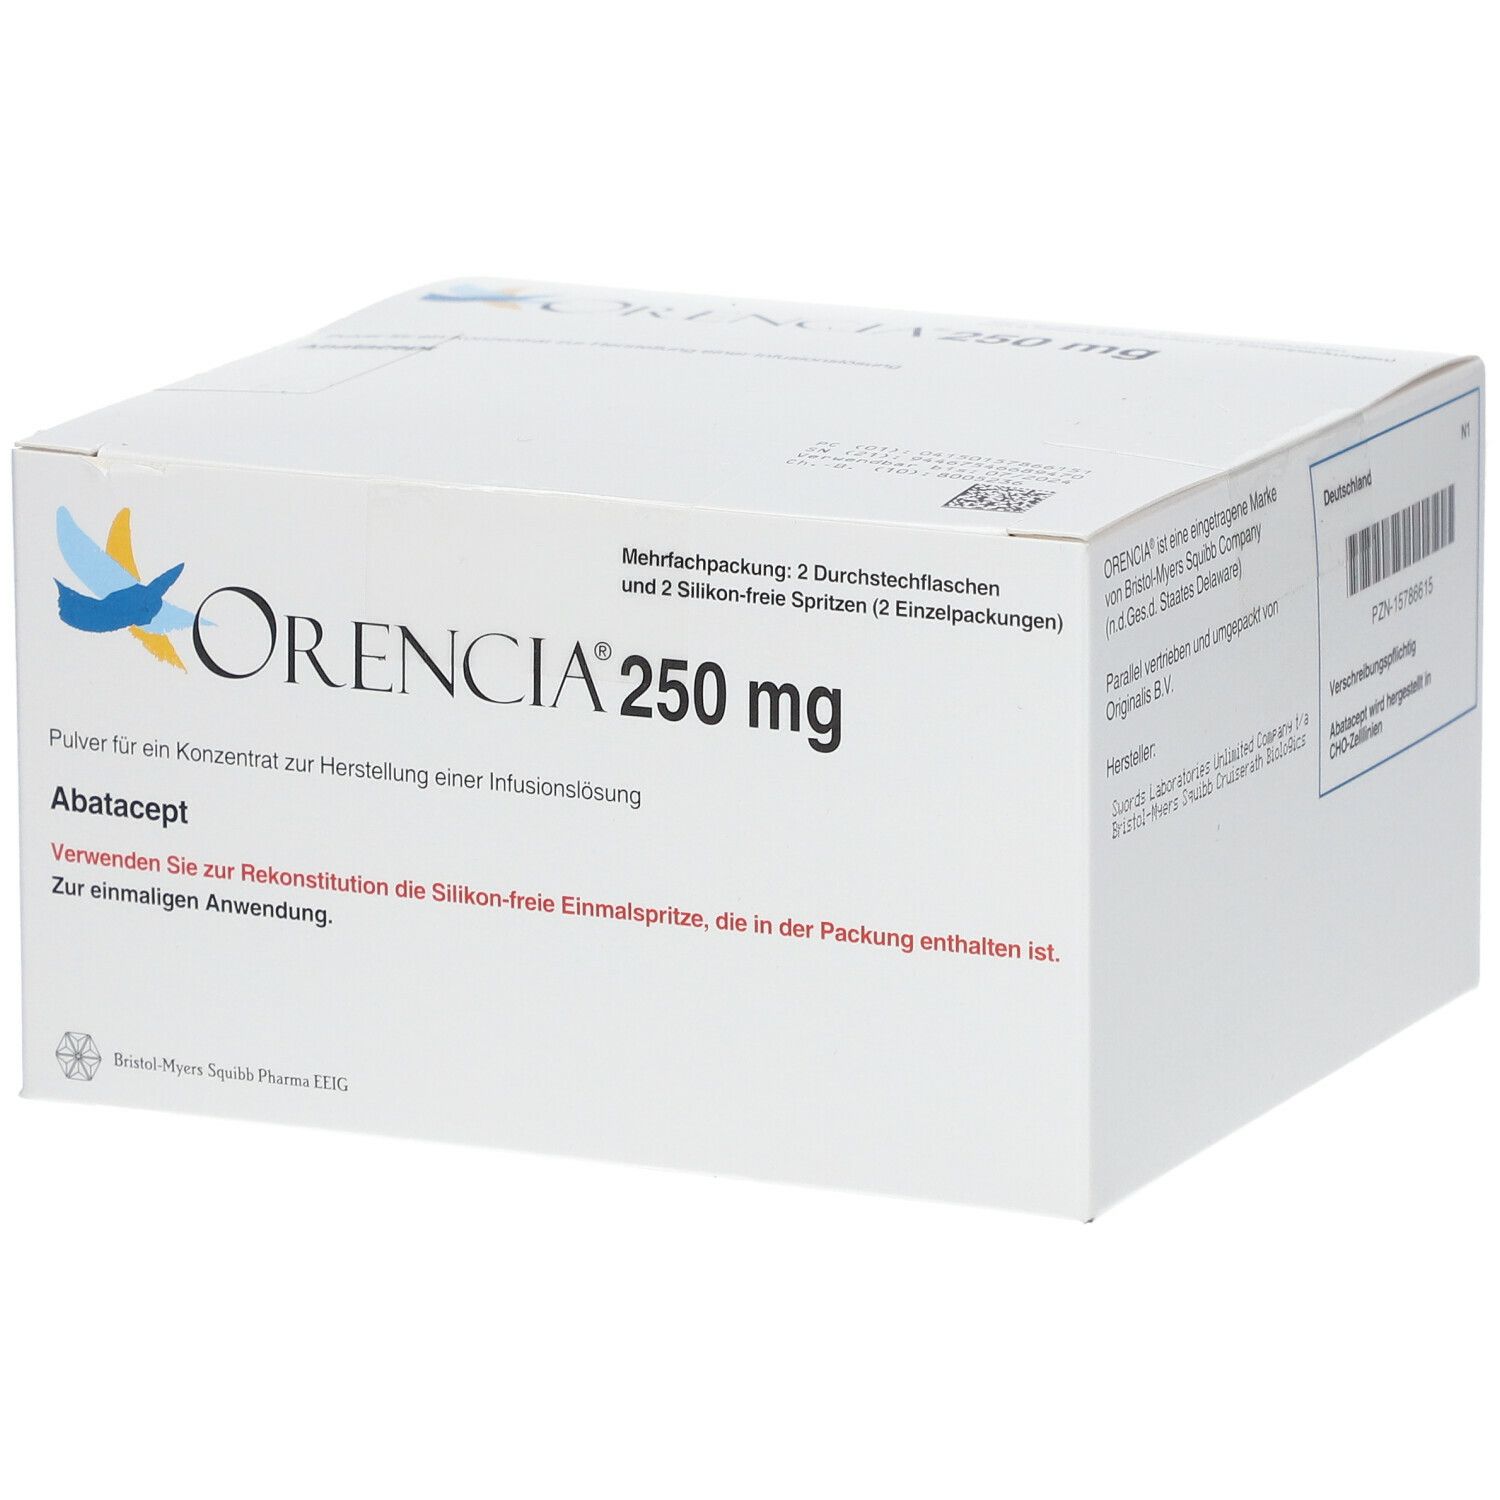 ORENCIA 250 mg Plv.f.e.Konz.z.Herst.e.Inf.-Lsg.